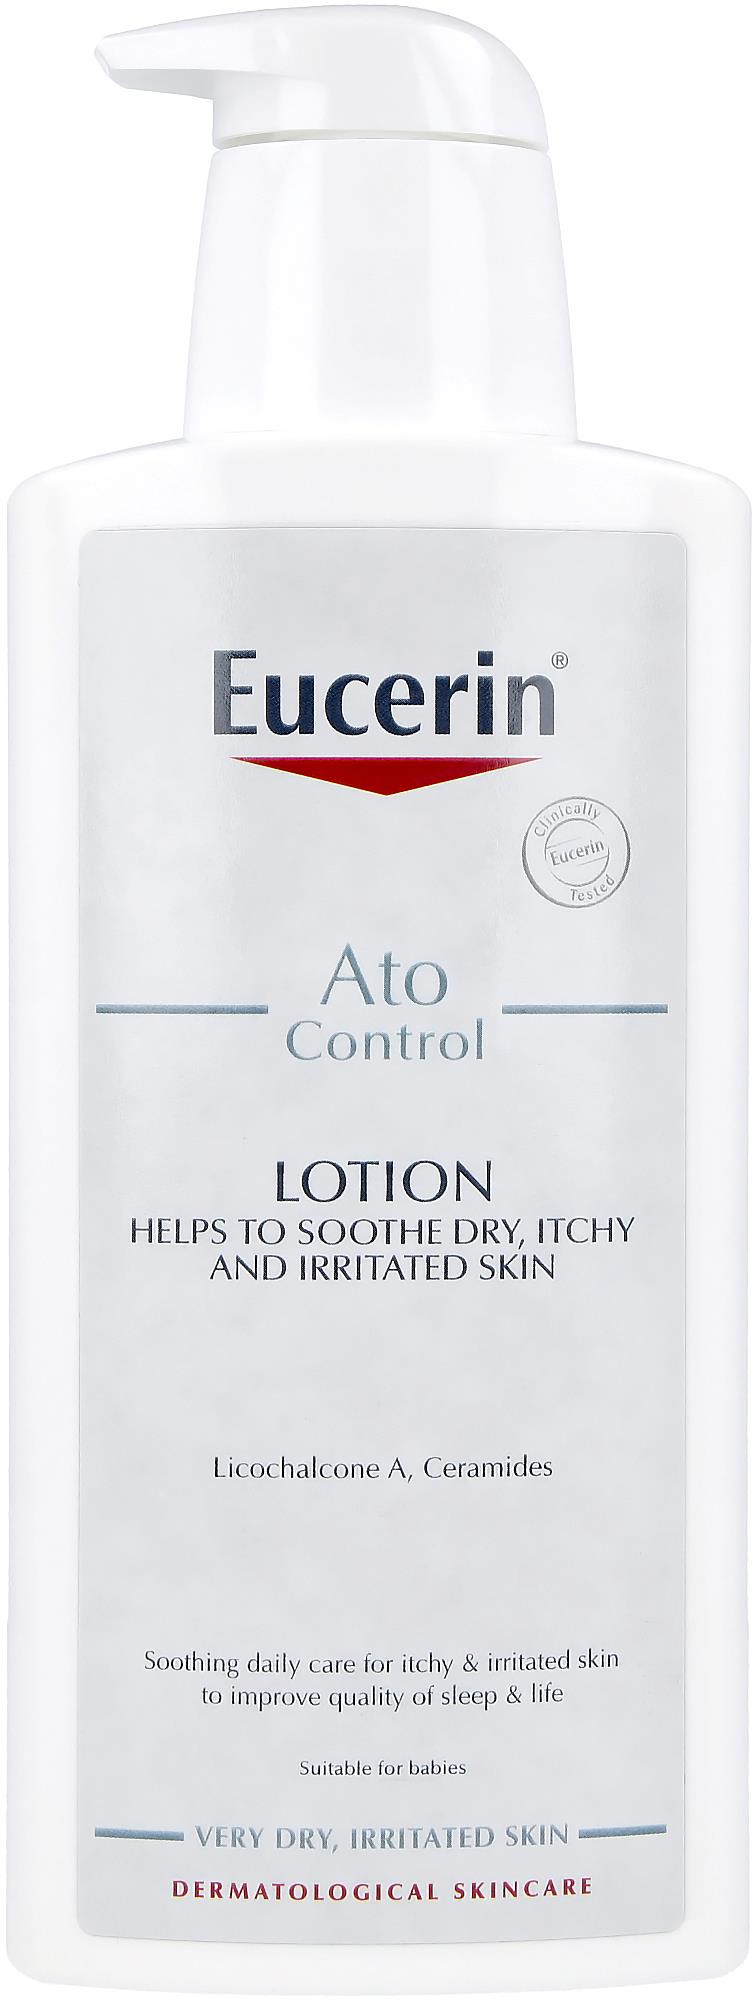 Eucerin Atocontrol Body Care Lotion 400 ml lyko.com